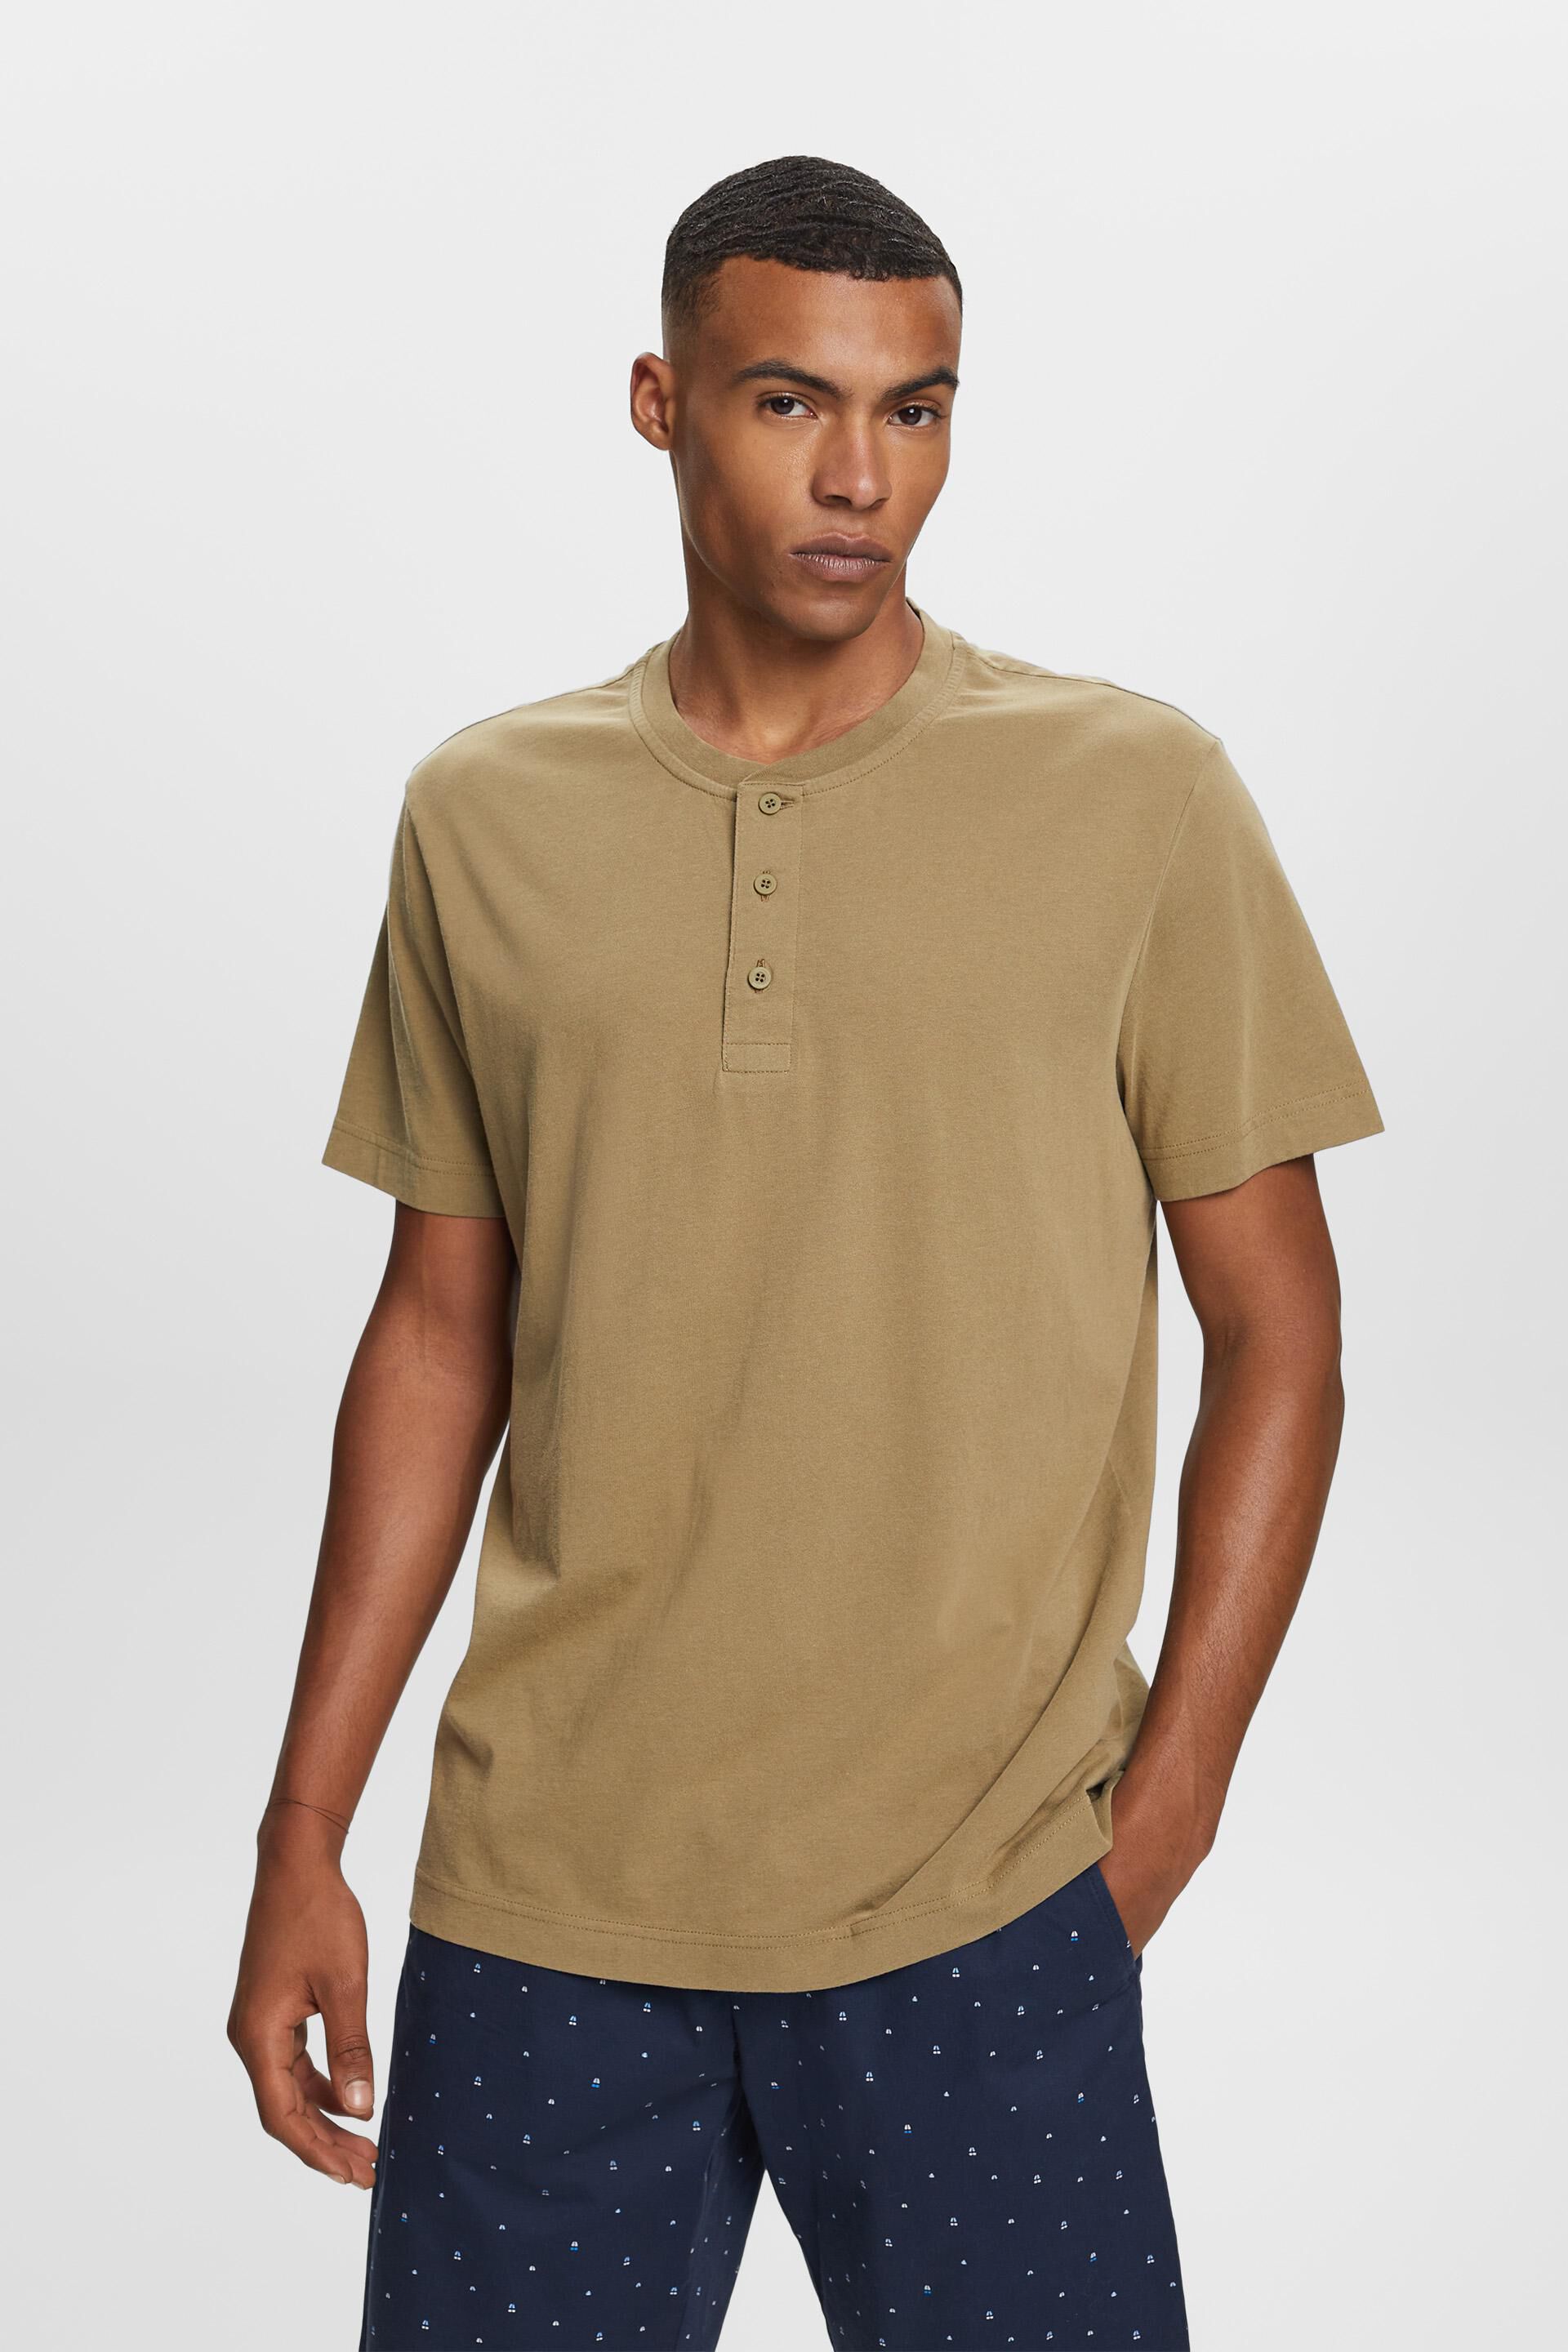 Esprit t-shirt, cotton 100% Henley